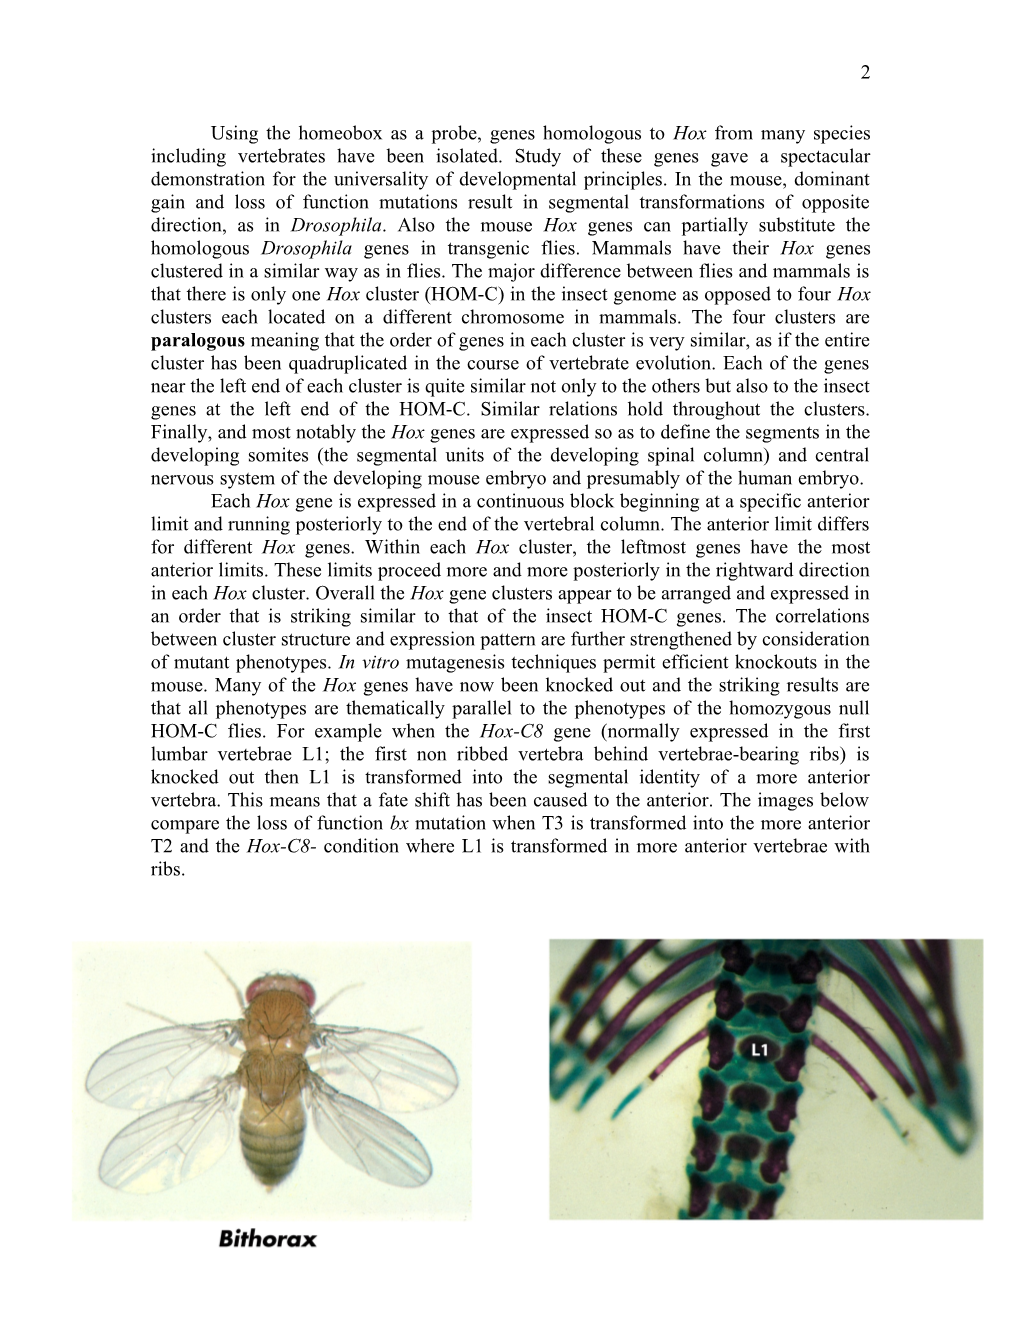 Control of the Drosophila Body Pattern